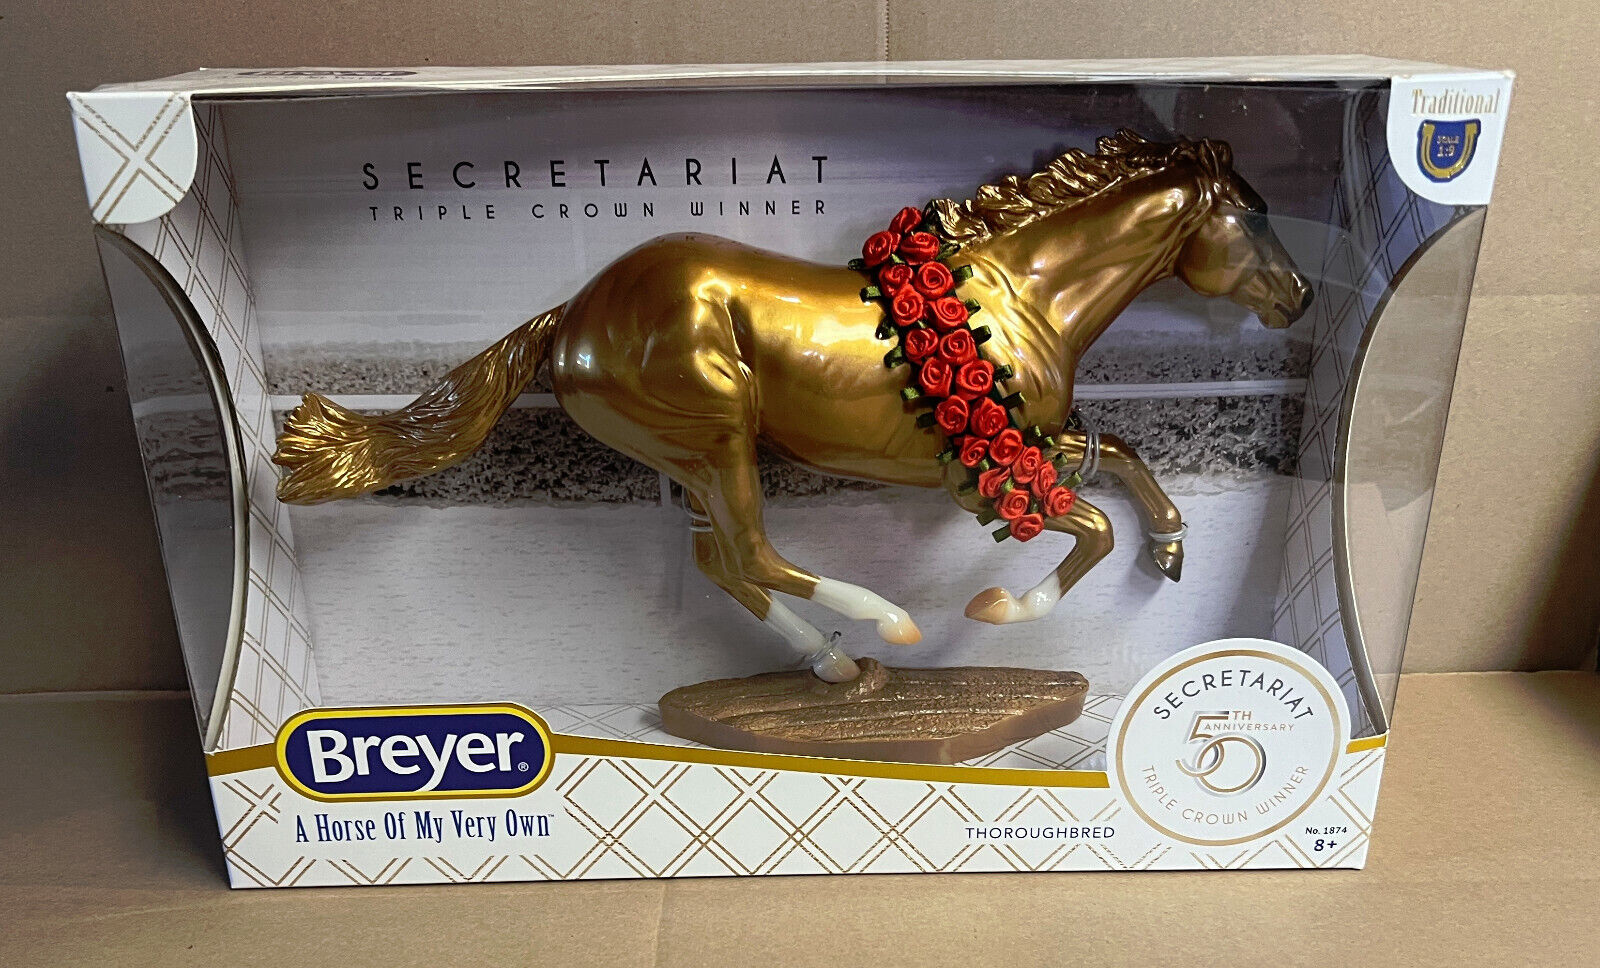 Breyer Horse Gold Secretariat 50th Anniversary Triple Crown Winner * SHIPS FREE